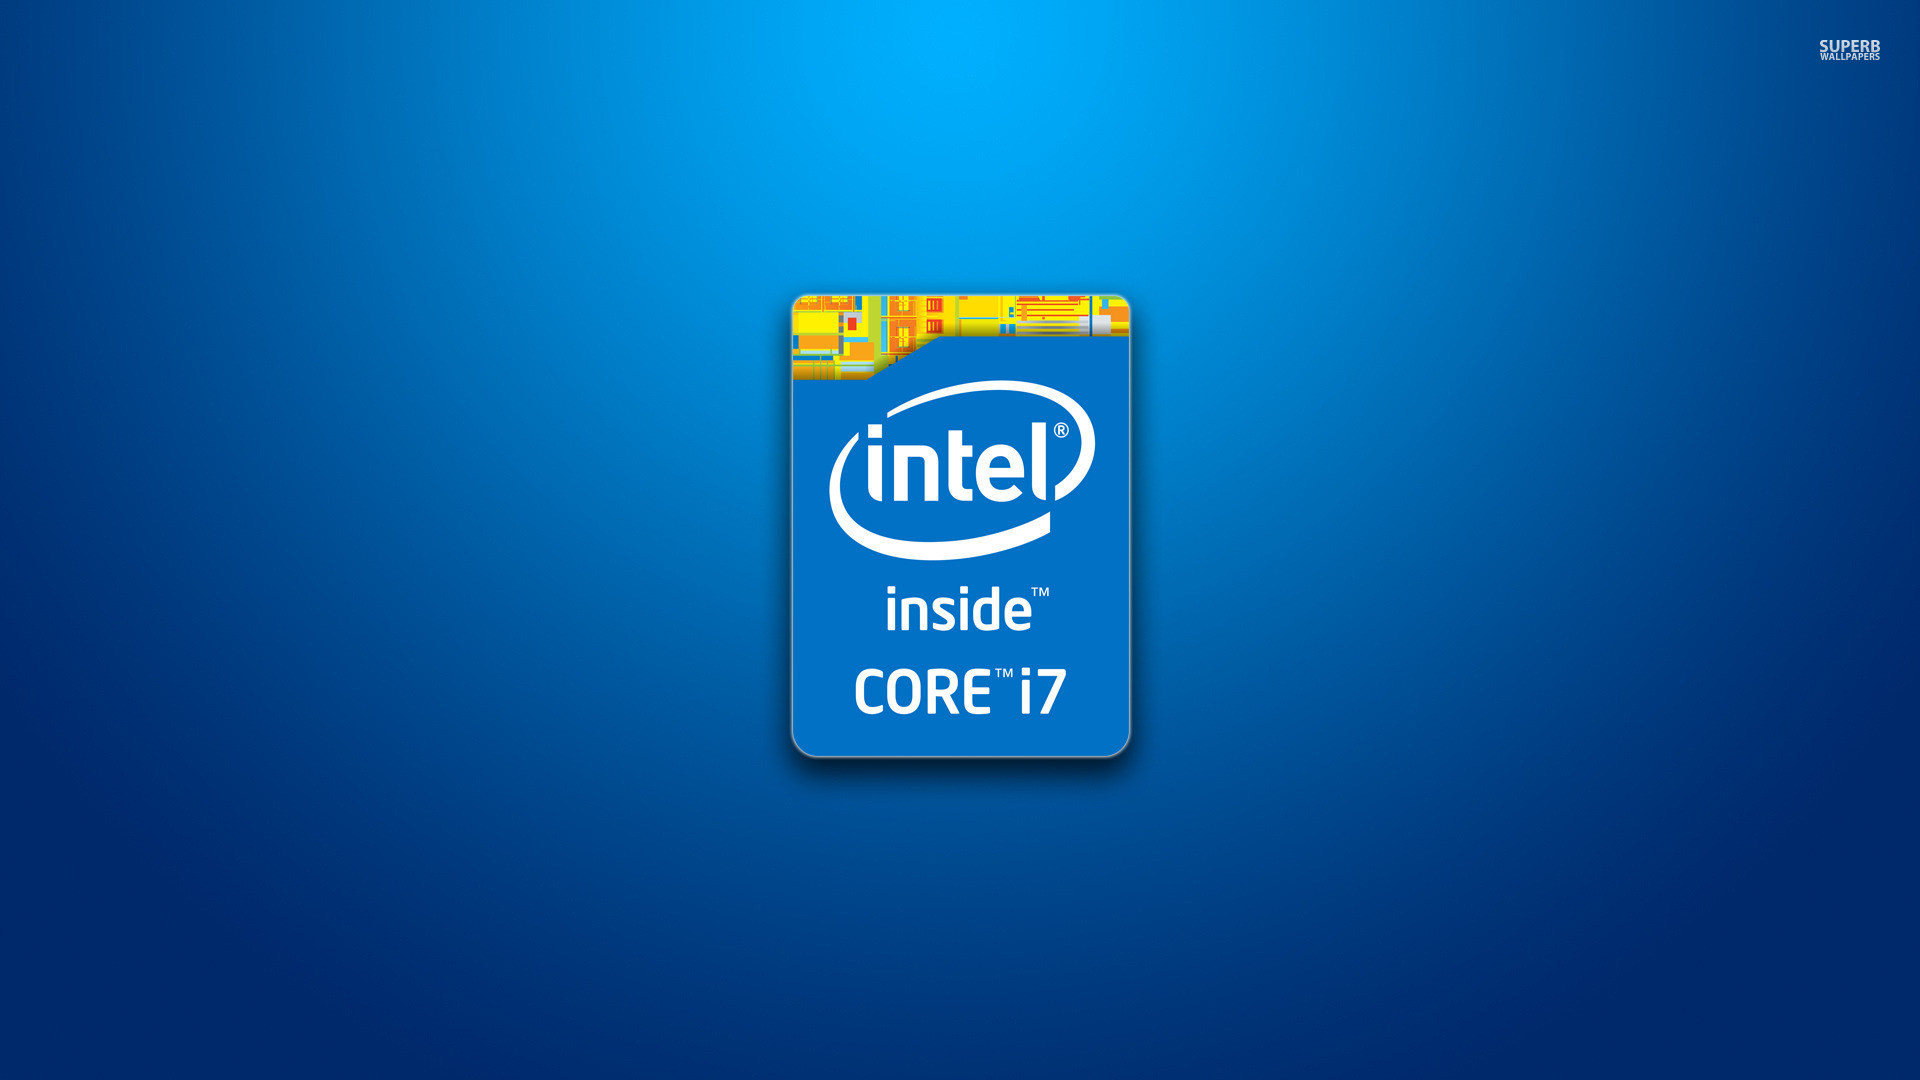 Intel I3 Wallpaper Eworld Price List - Intel Core I7 - 1920x1080 Wallpaper  